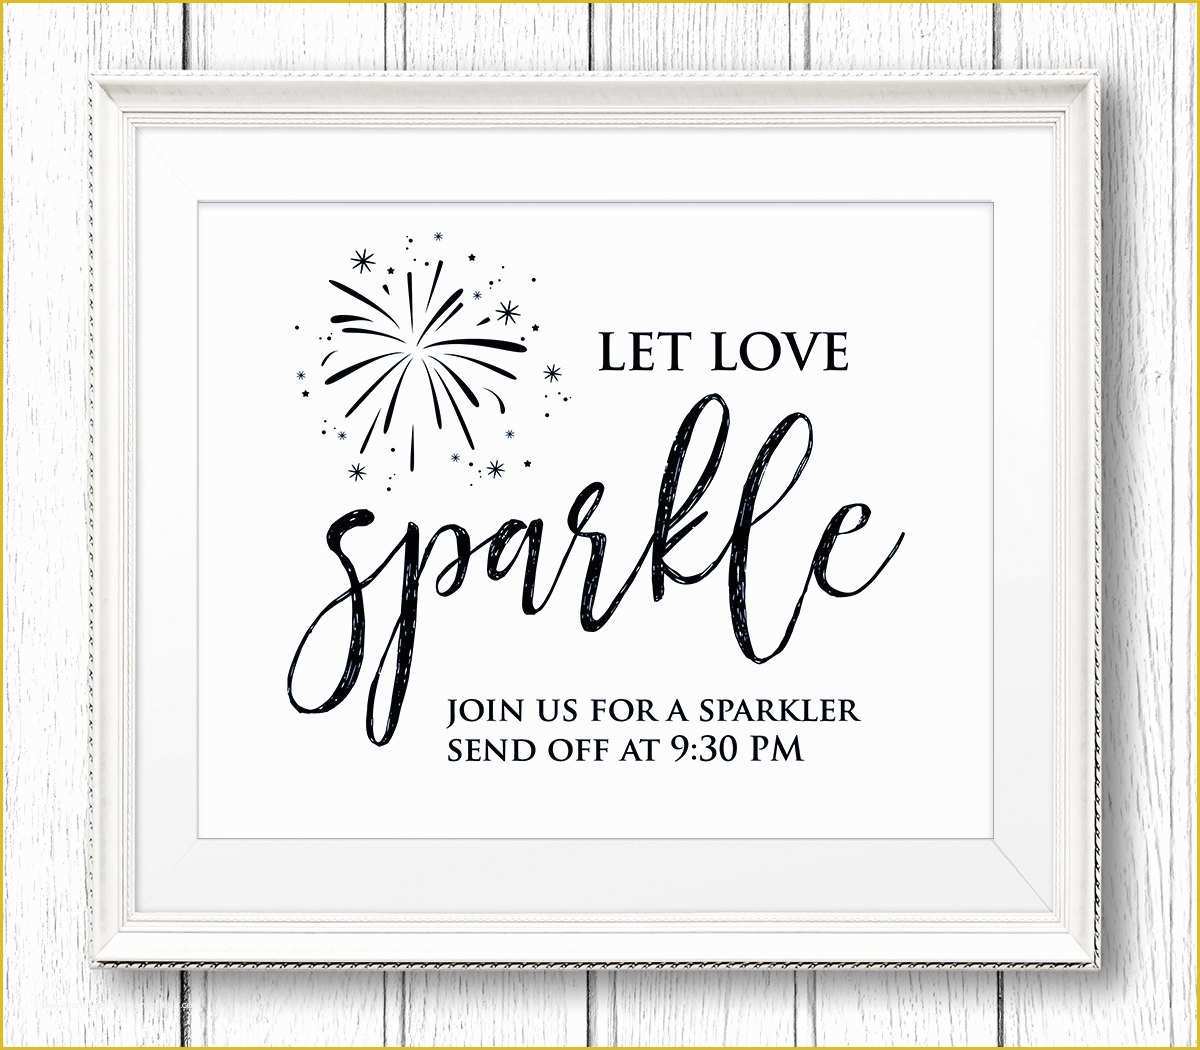 Free Wedding Sign Templates Of Sparkler Send F Sign Let Love Sparkle Diy Wedding Sign